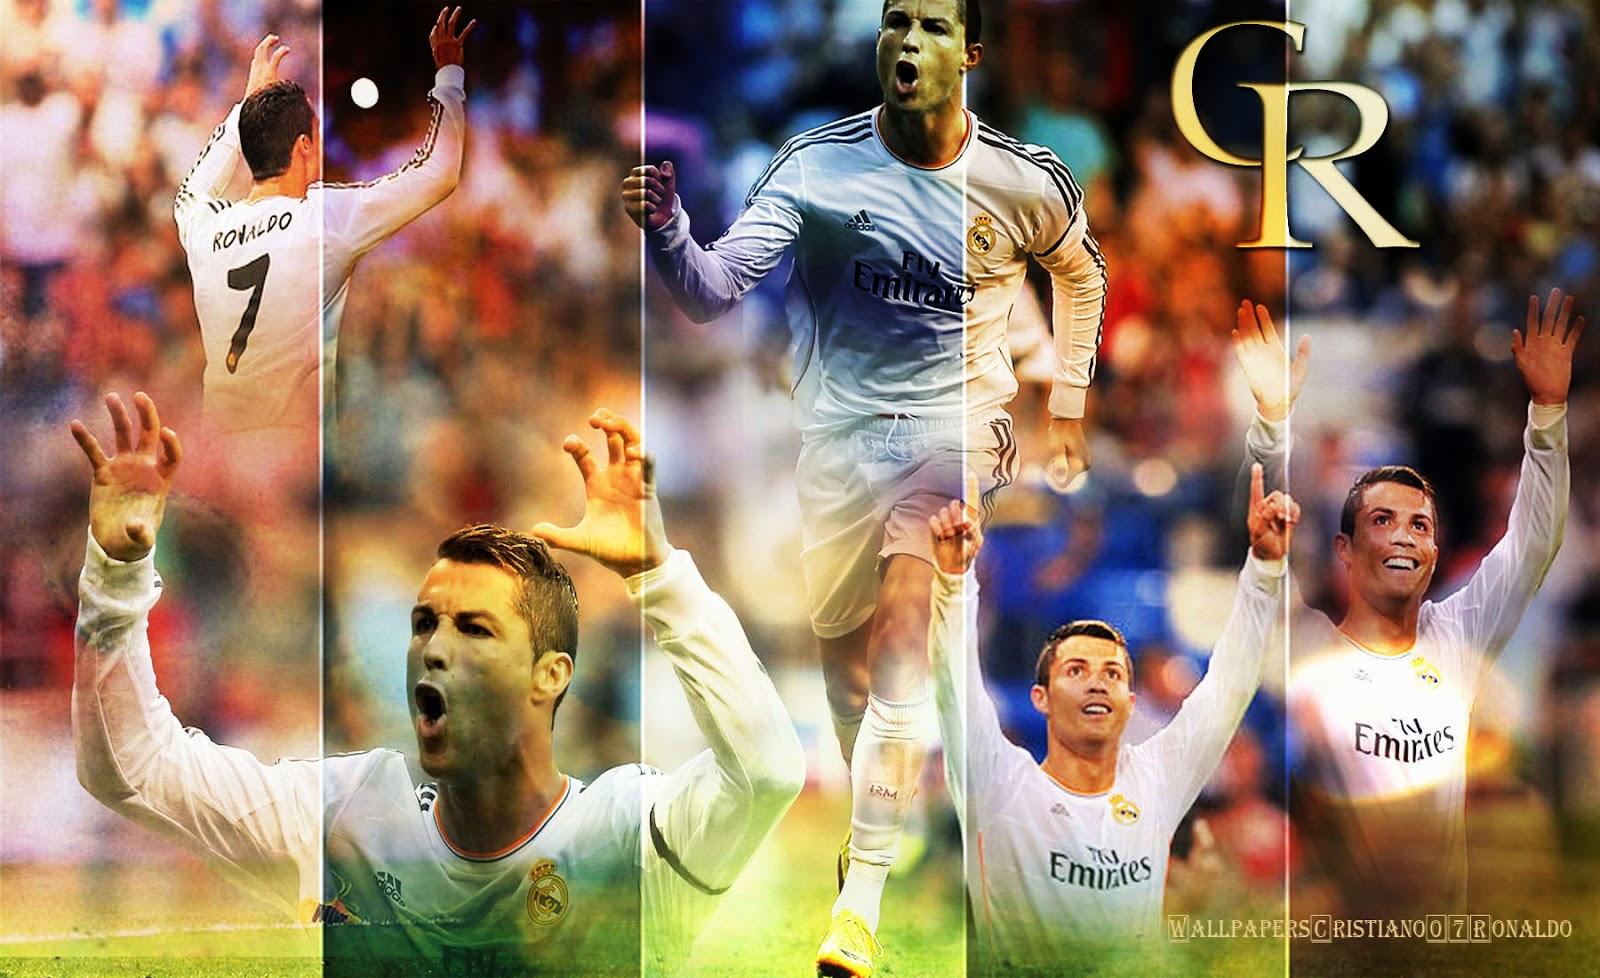 Cristiano Ronaldo Wallpapers: Cristiano Ronaldo Wallpaper ...